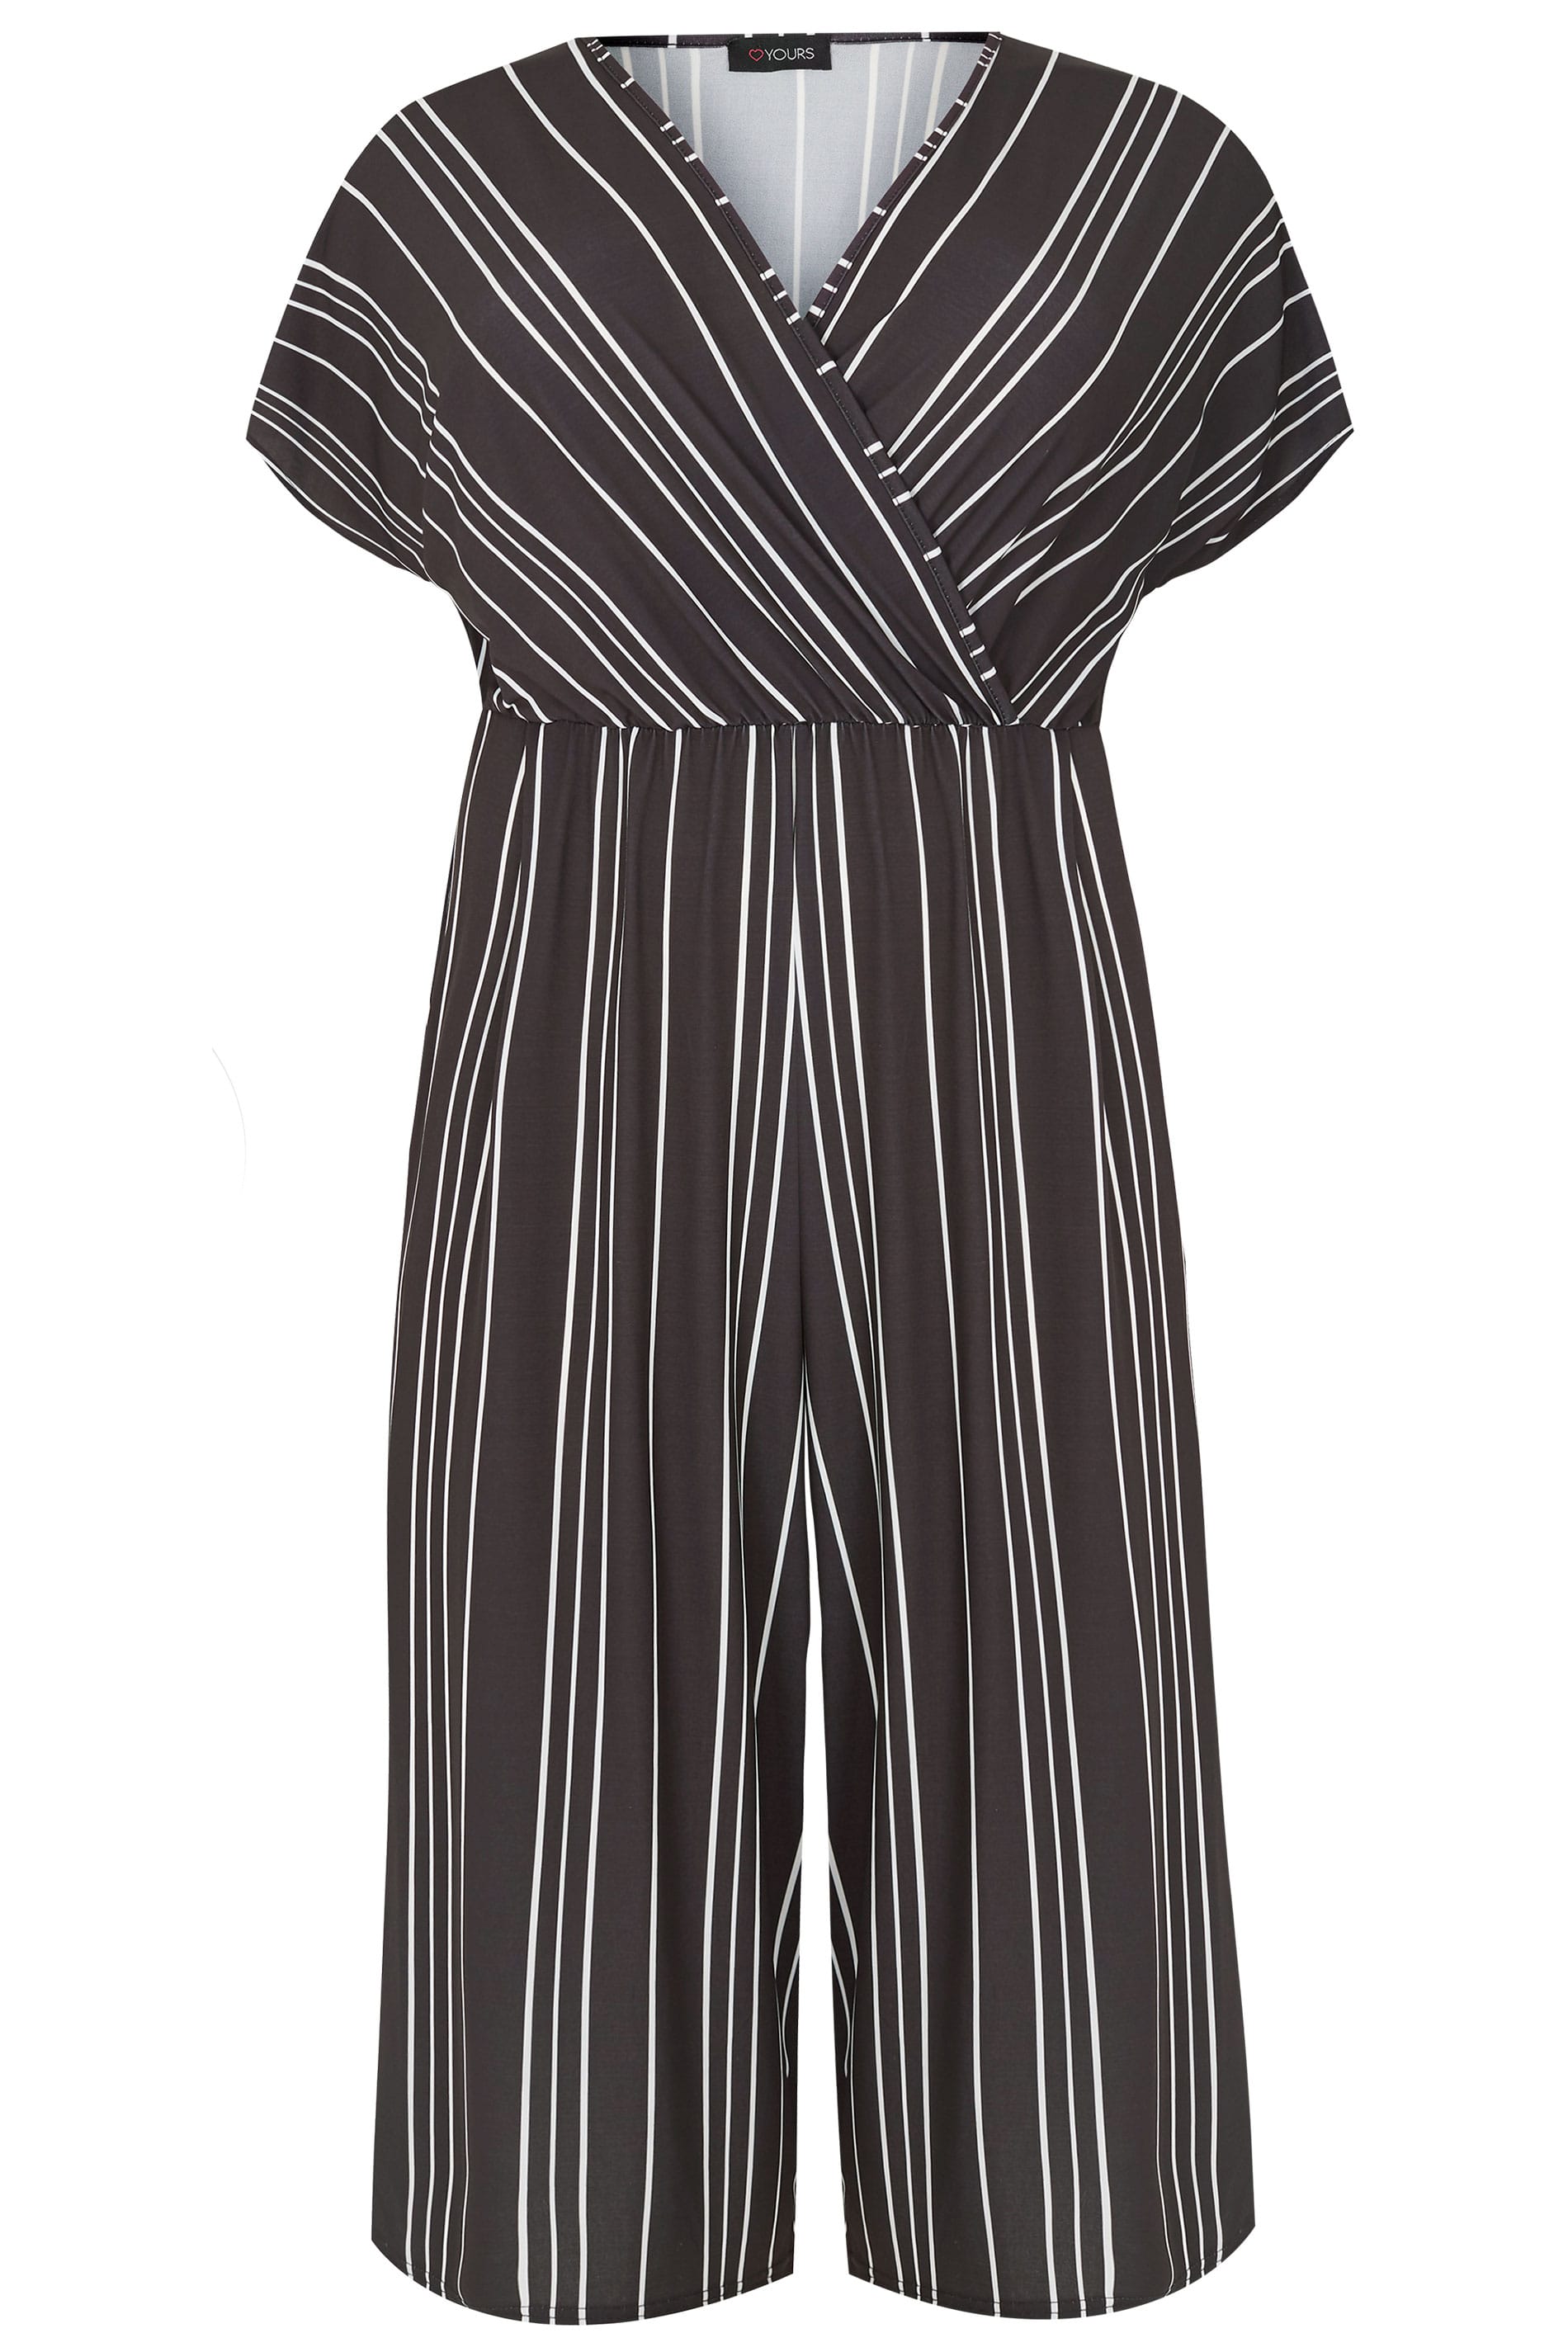 Black & White Striped Jumpsuit, Plus size 16 to 32